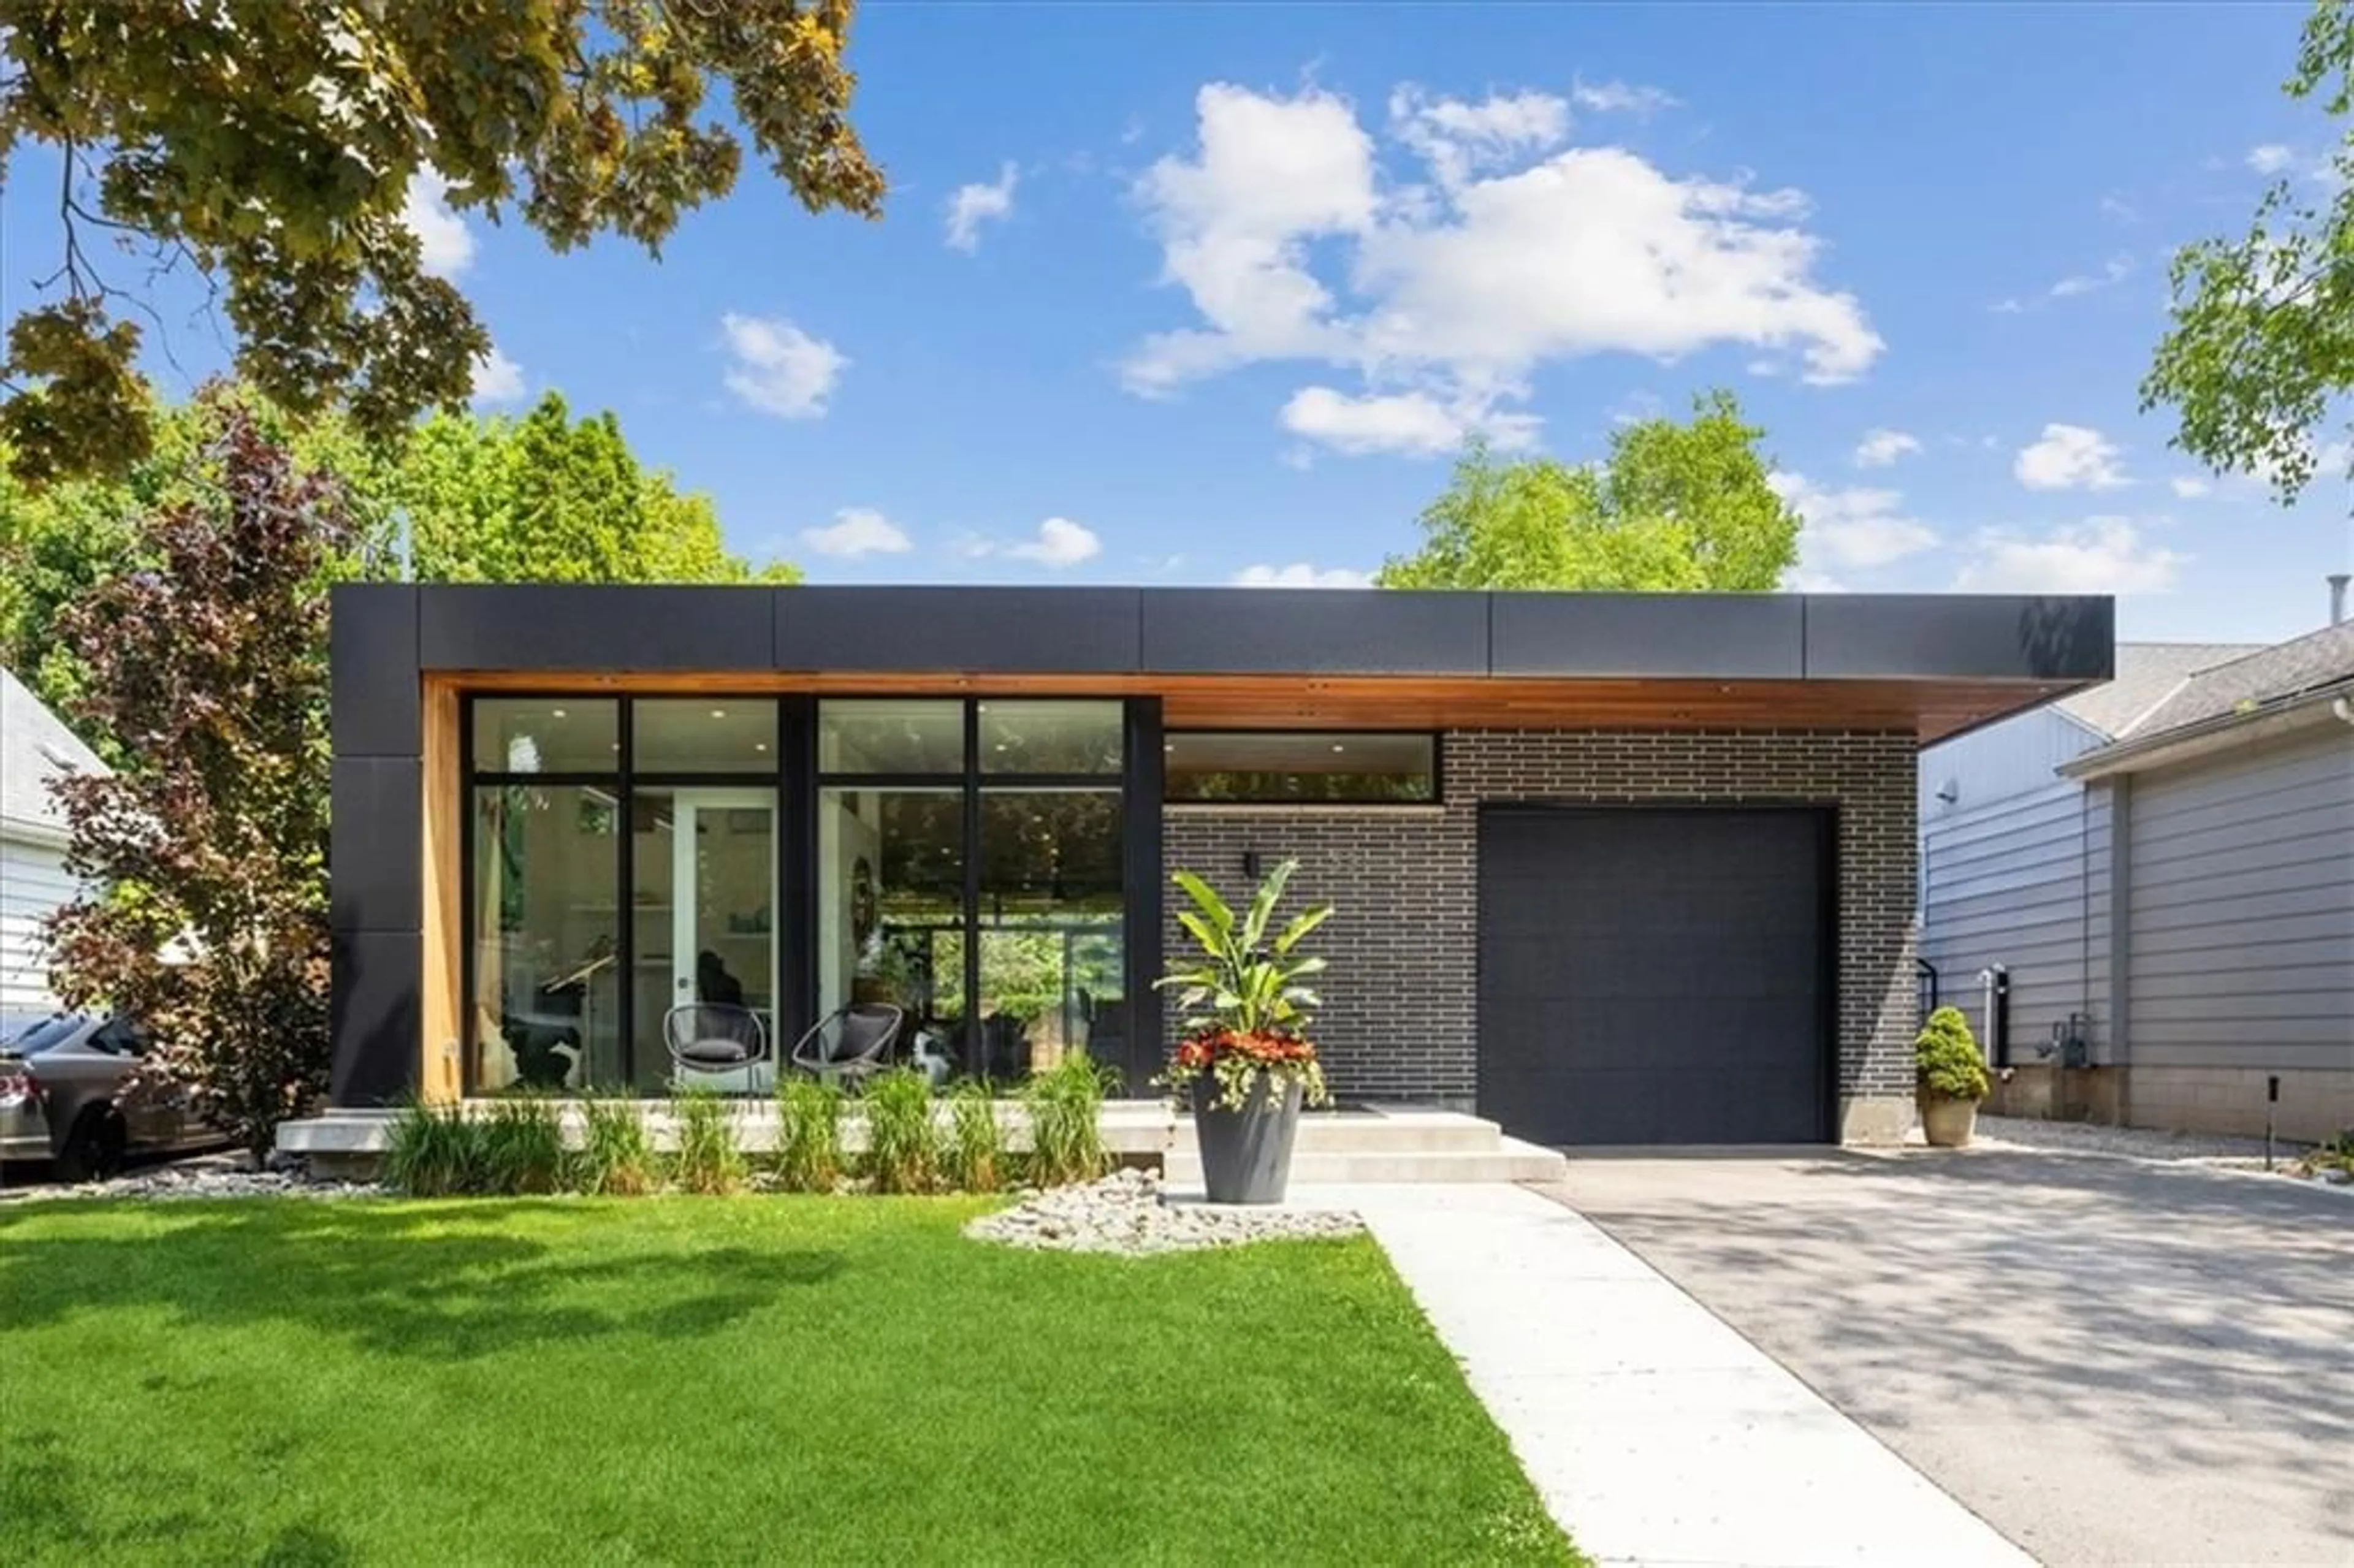 Home with brick exterior material for 531 BRIDGMAN Ave, Burlington Ontario L7R 2V5